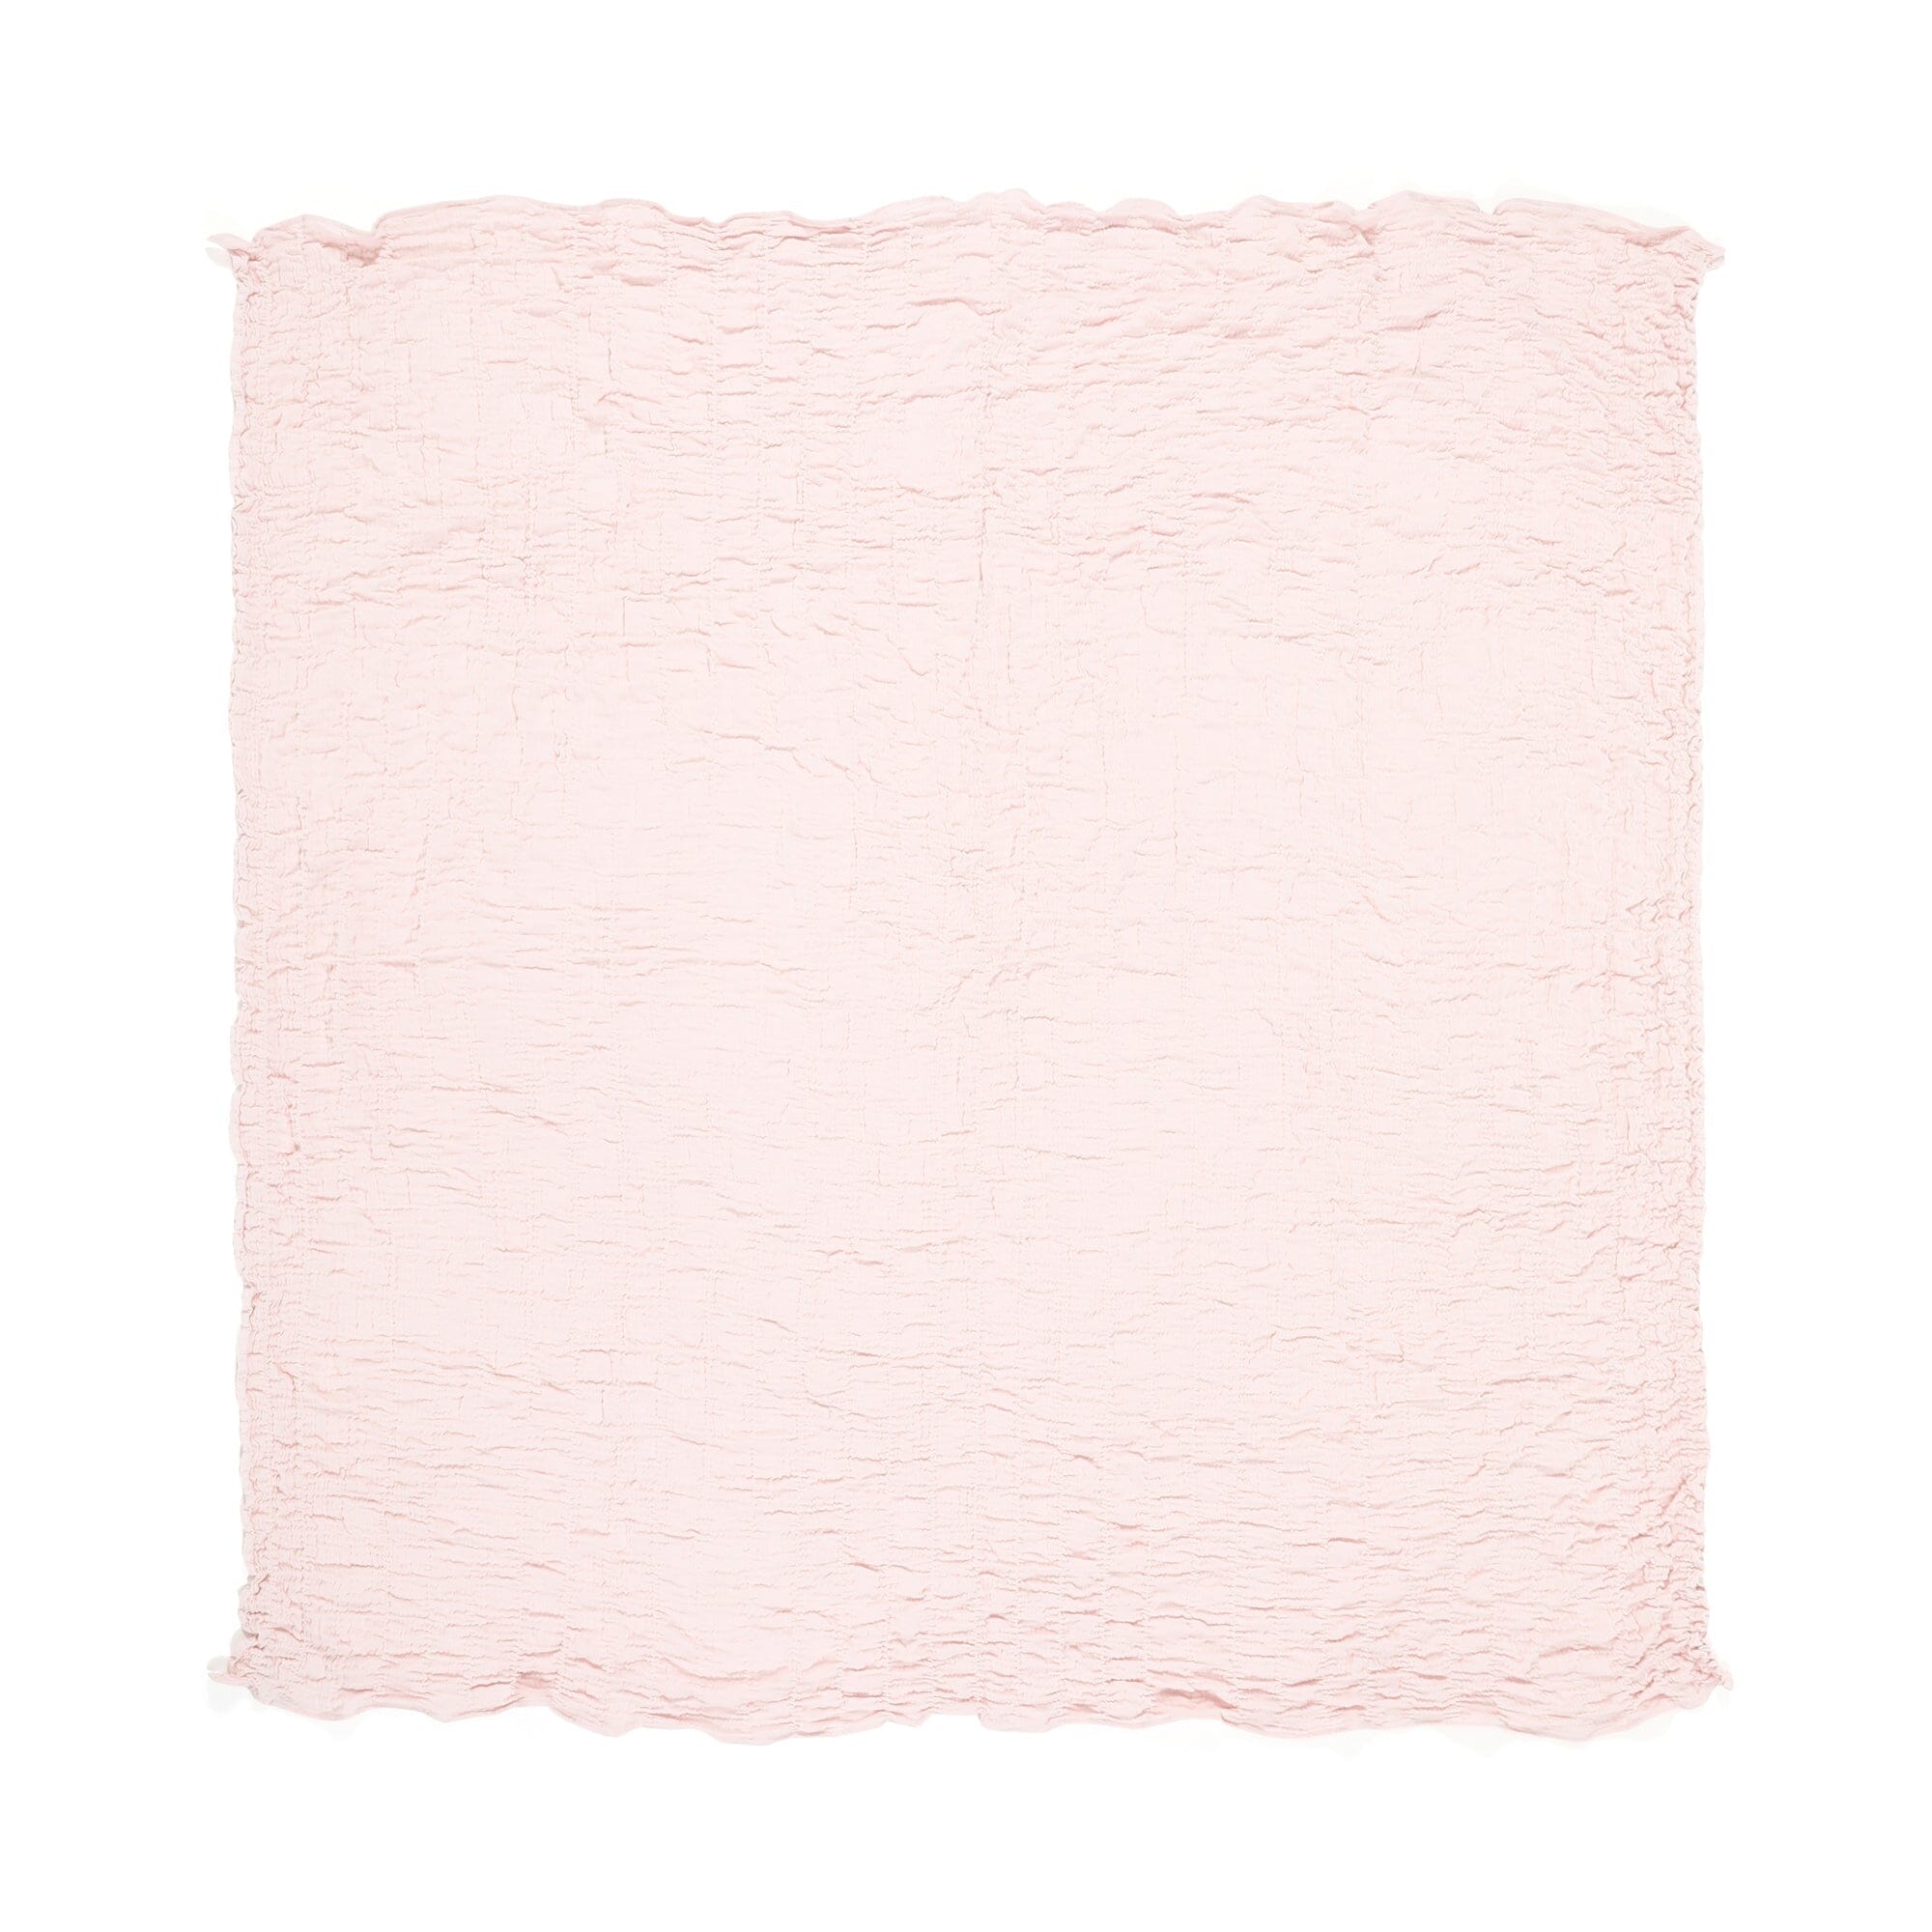 Ripple Summer Blanket D 1800 X 1900 Light Pink